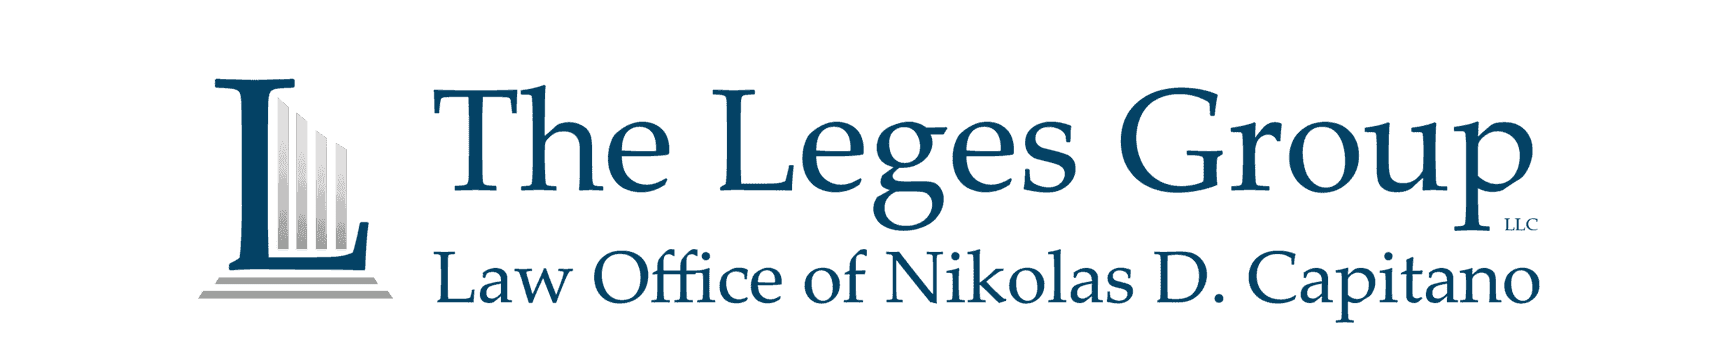 Law Office of Nikolas D. Capitano, The Leges Group LLC